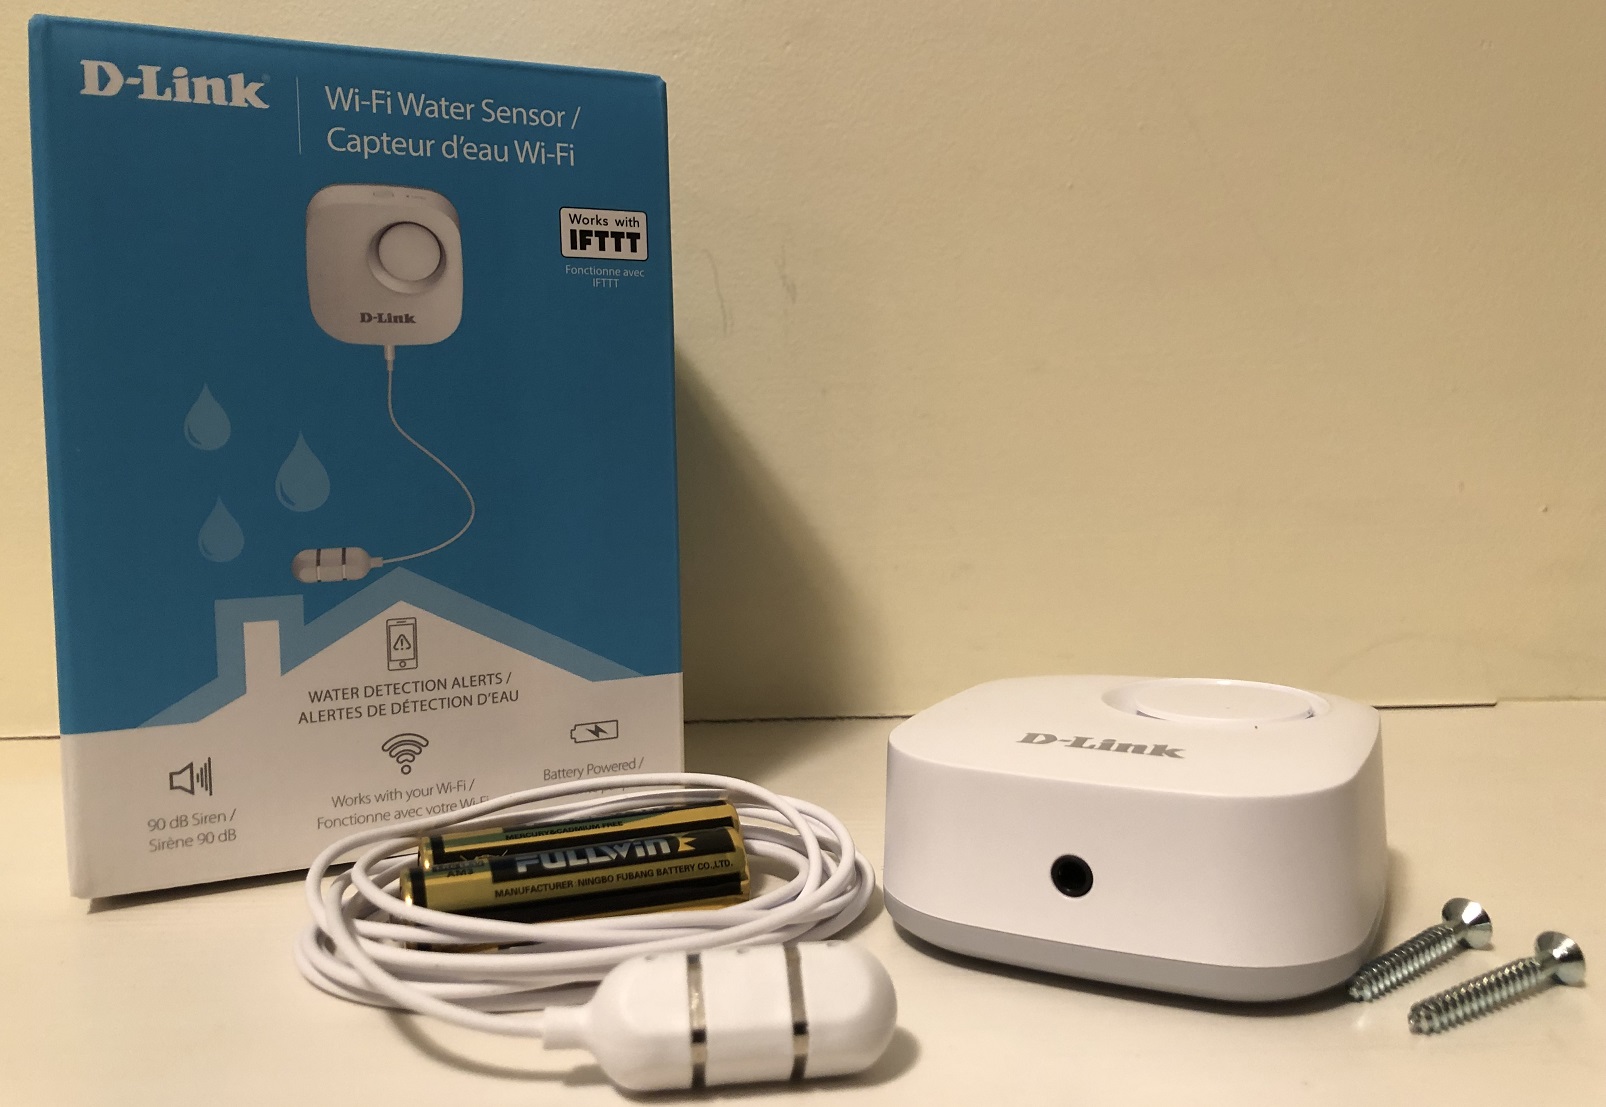 D-Link Wi-Fi Water Sensor Featured